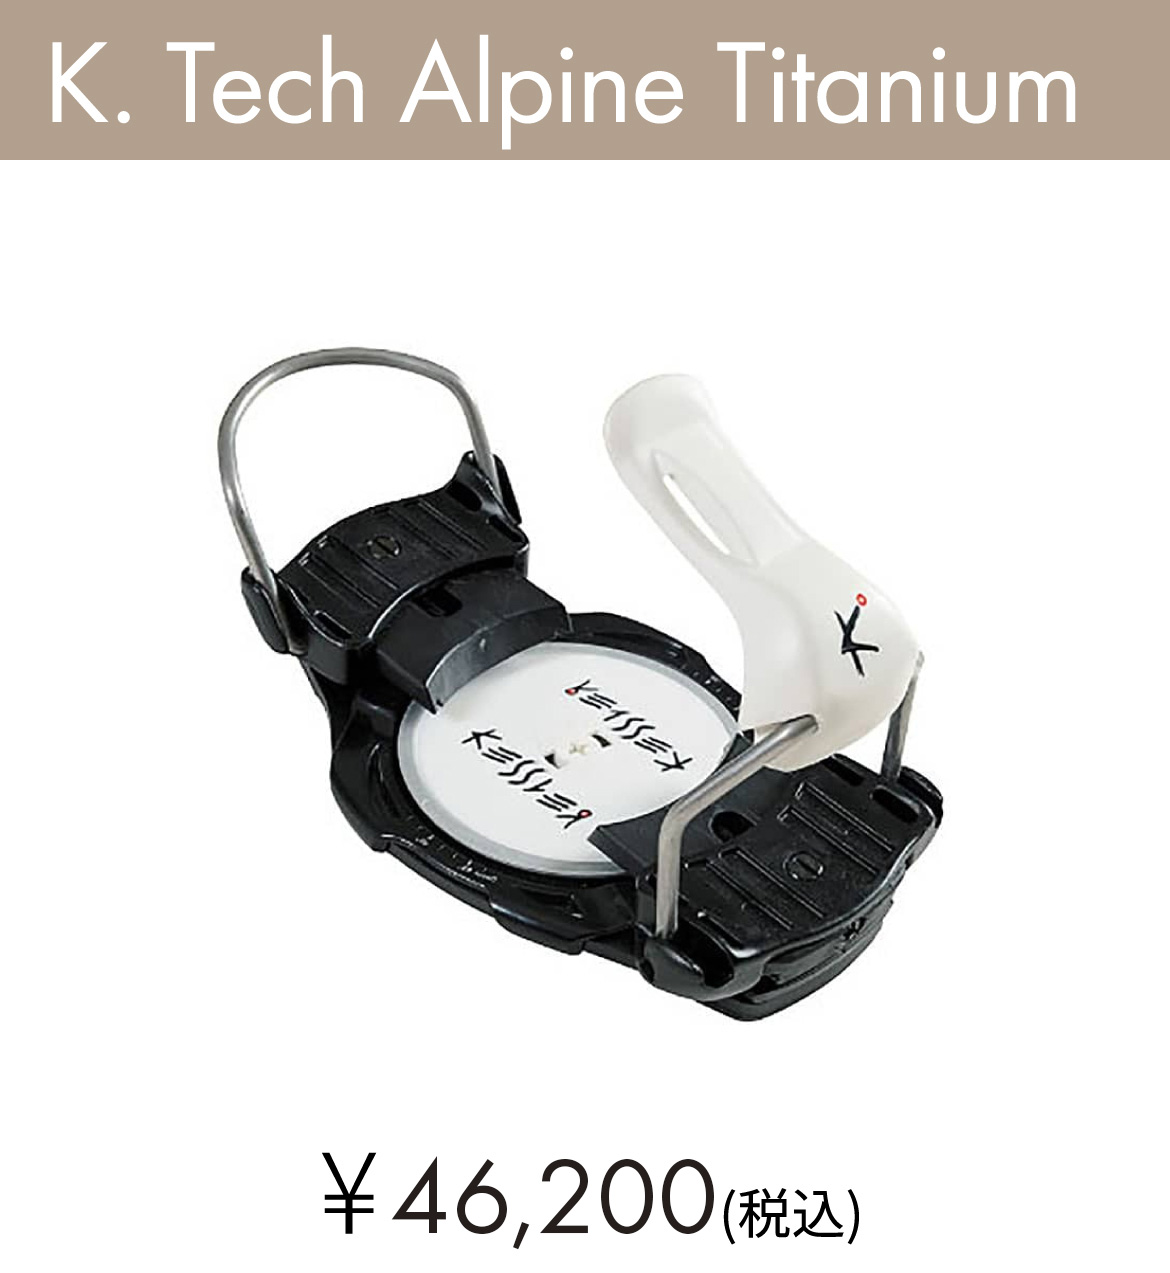 K. Tech Alpine Titanium